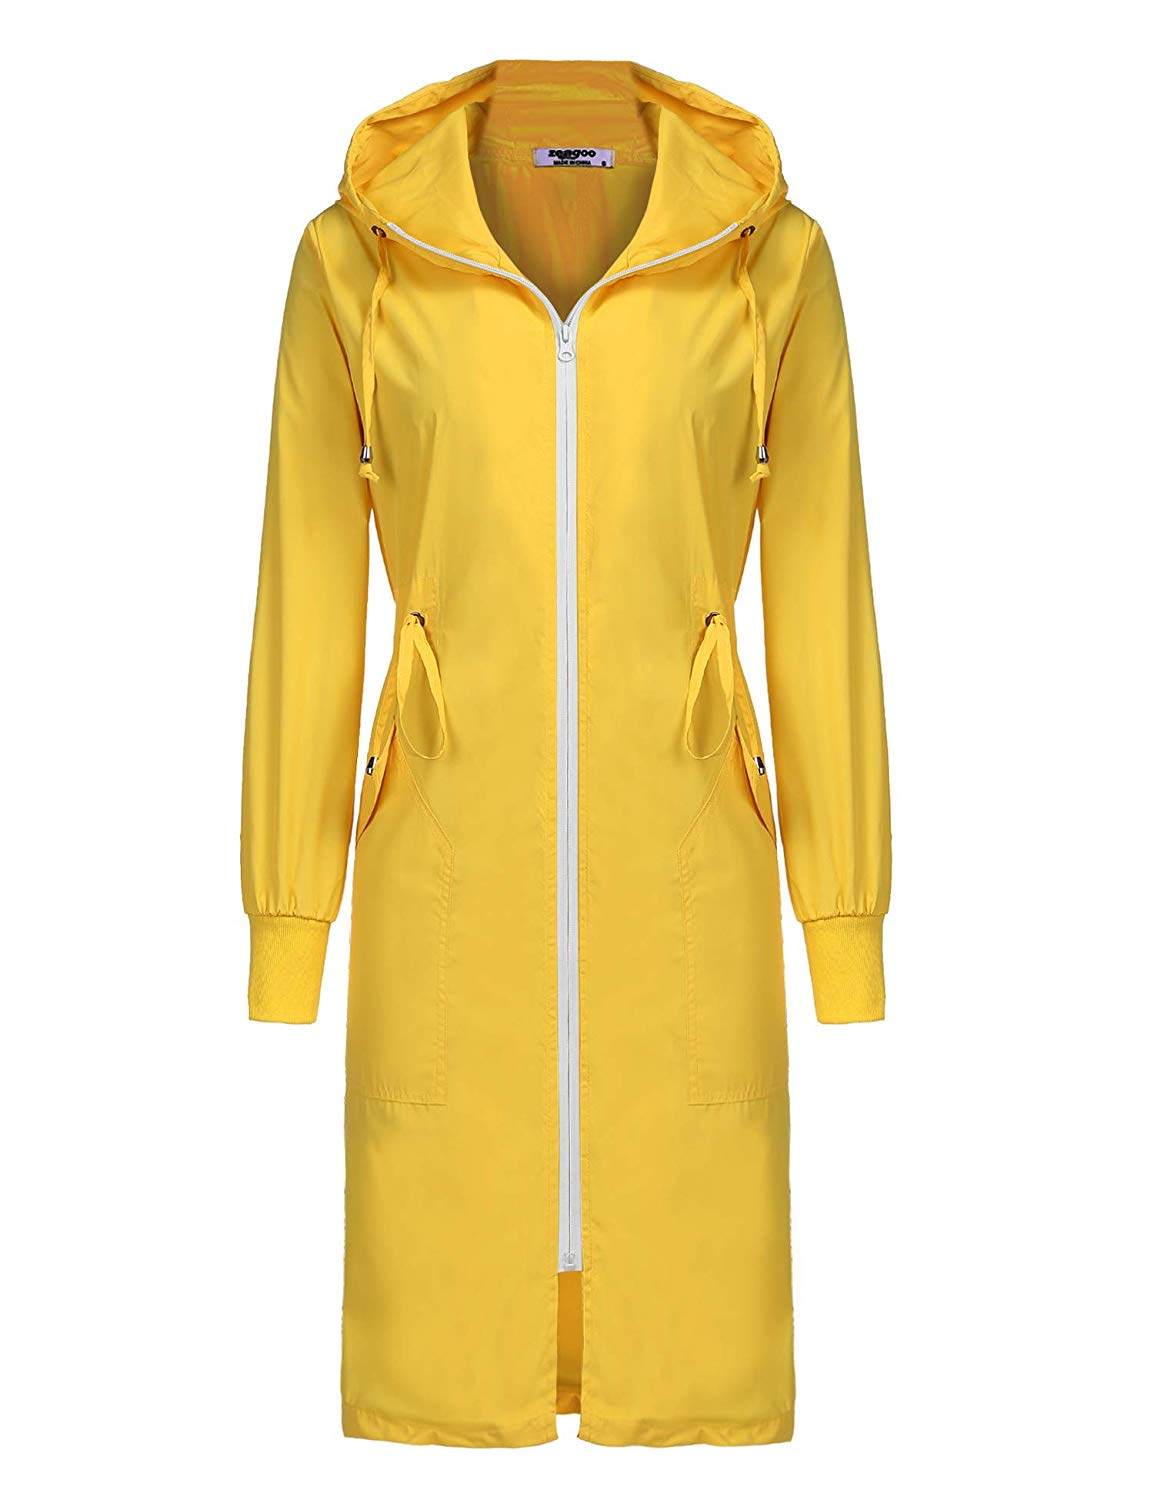 women's long lightweight raincoat